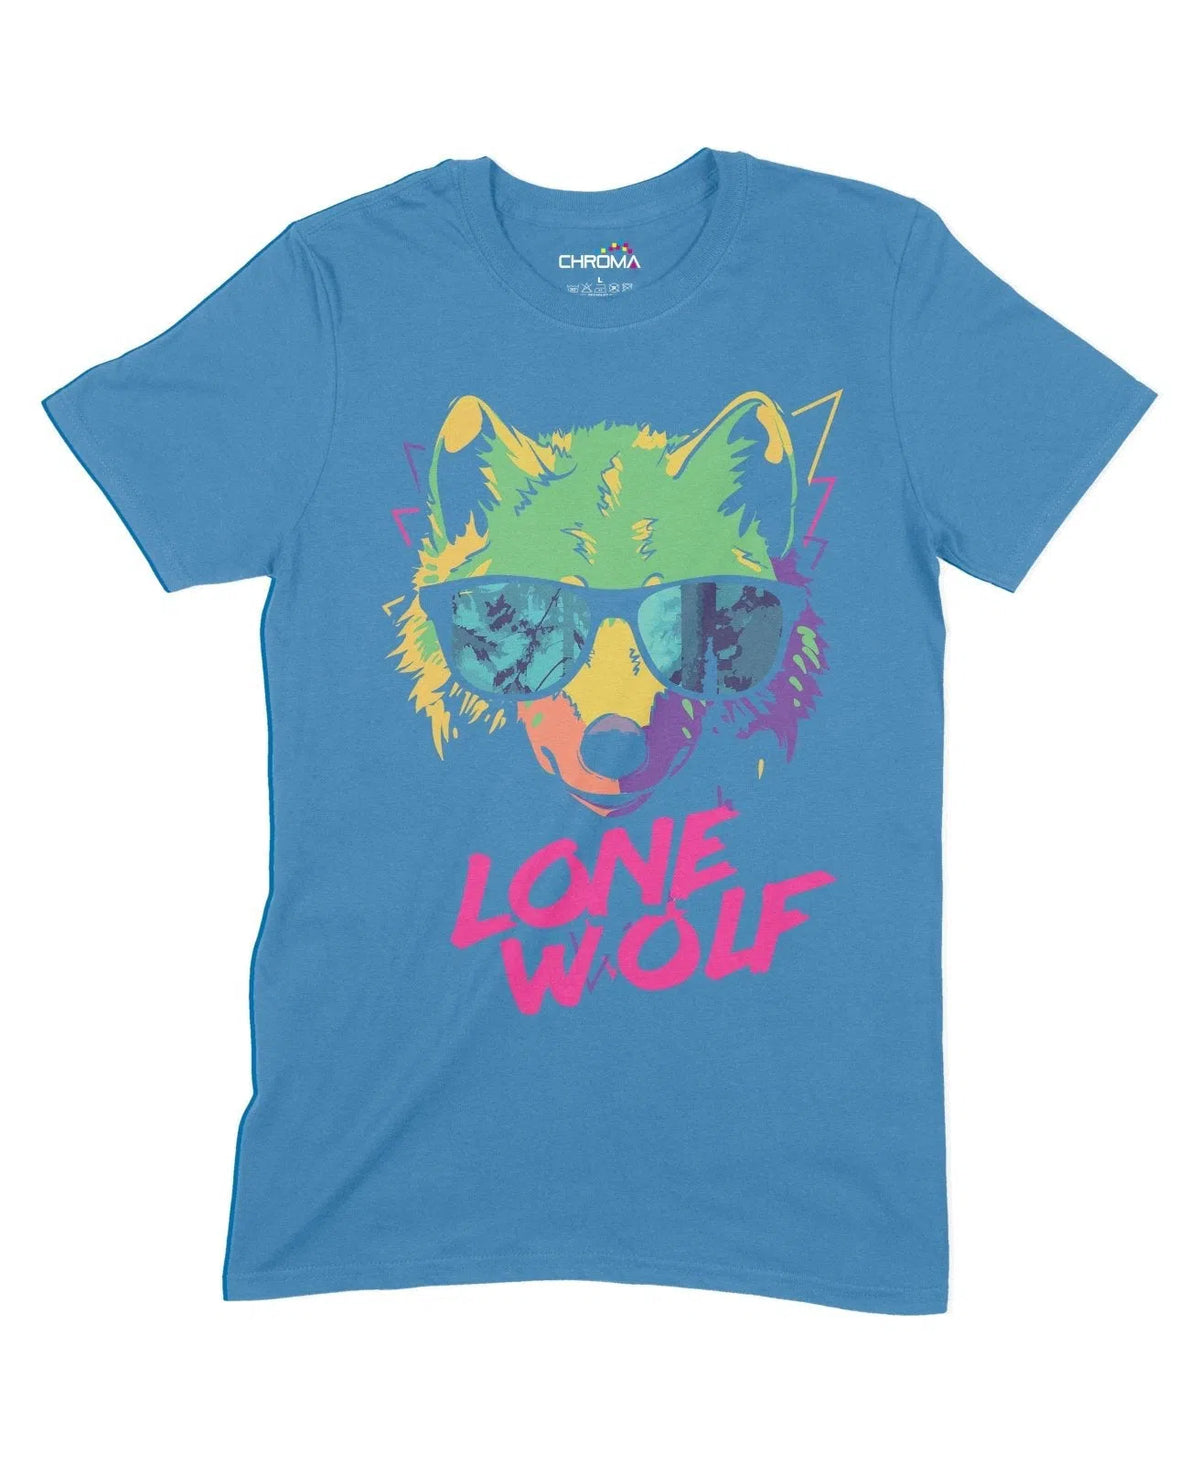 Lone Wolf Retro Unisex Adult T-Shirt | Premium Quality Streetwear Chroma Clothing